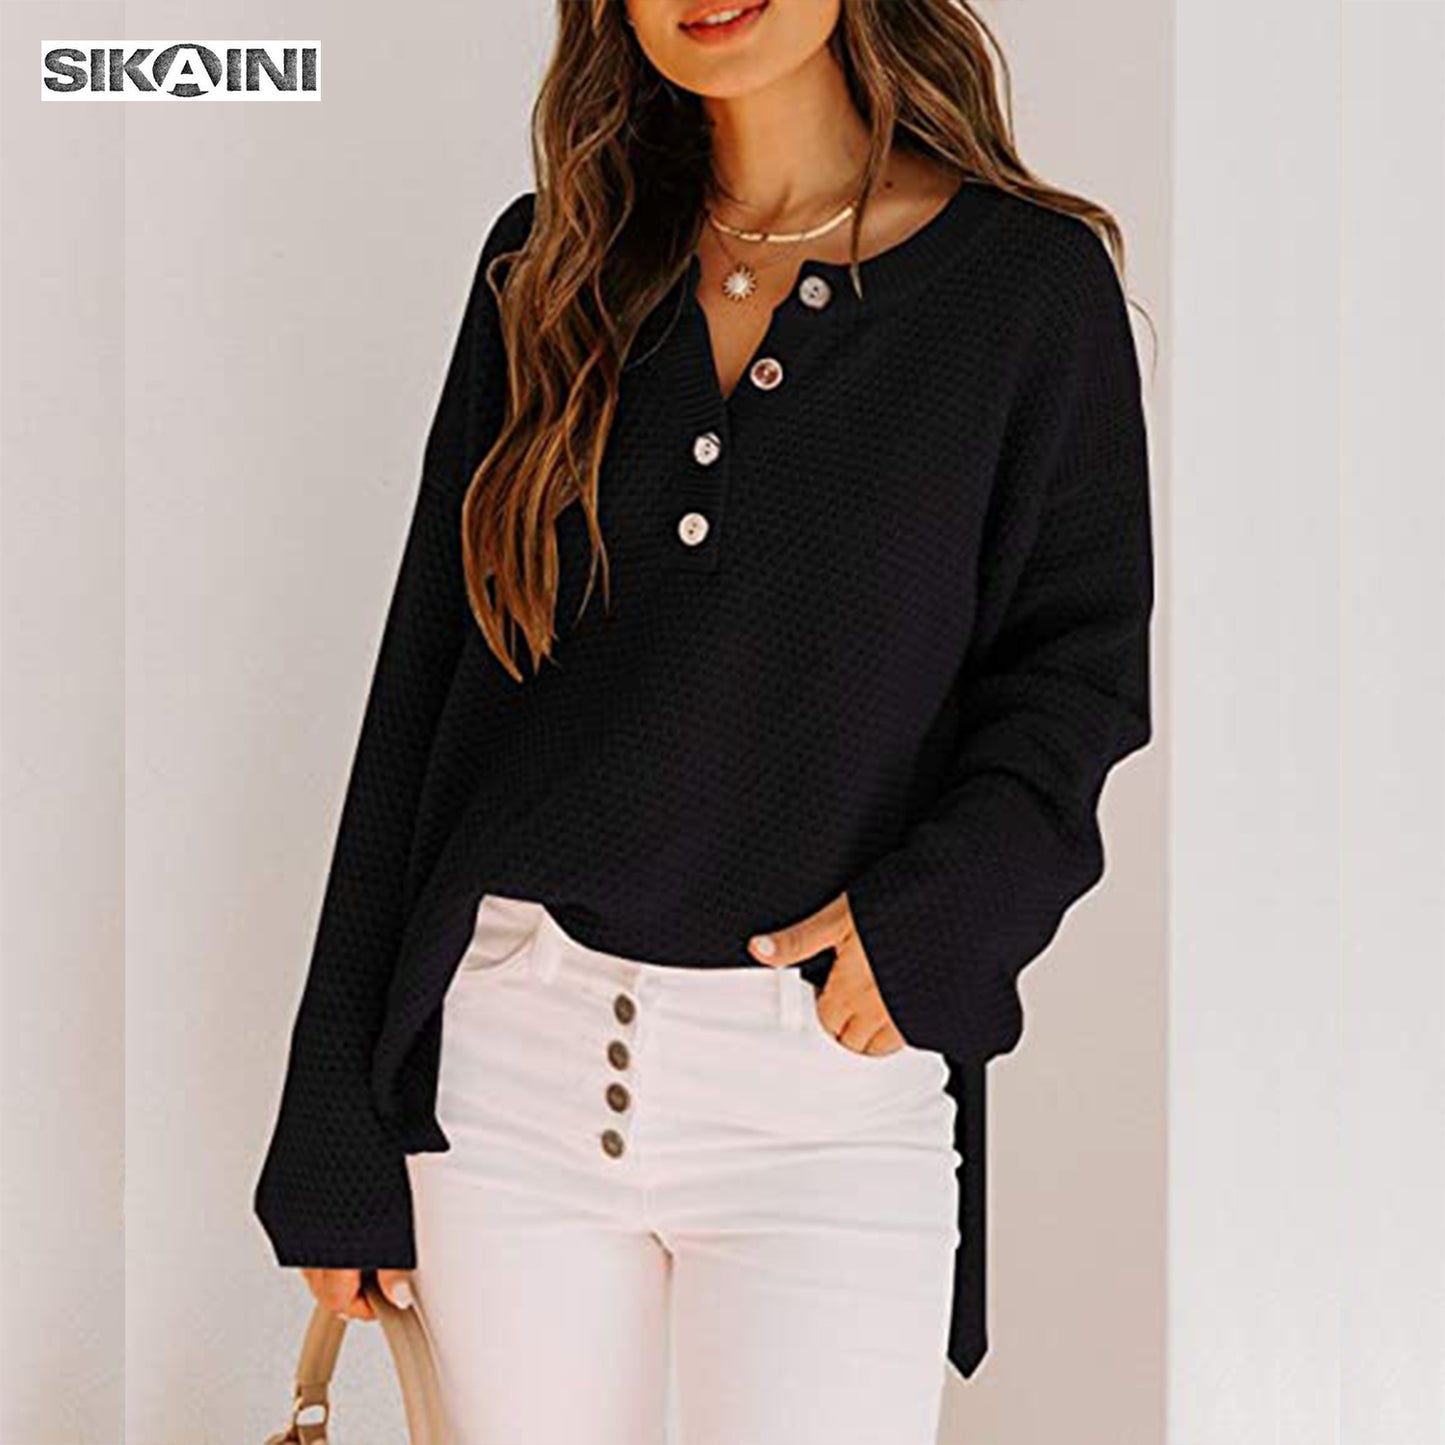 SIKAINI Women's Oversized Sweaters Batwing Long Sleeve